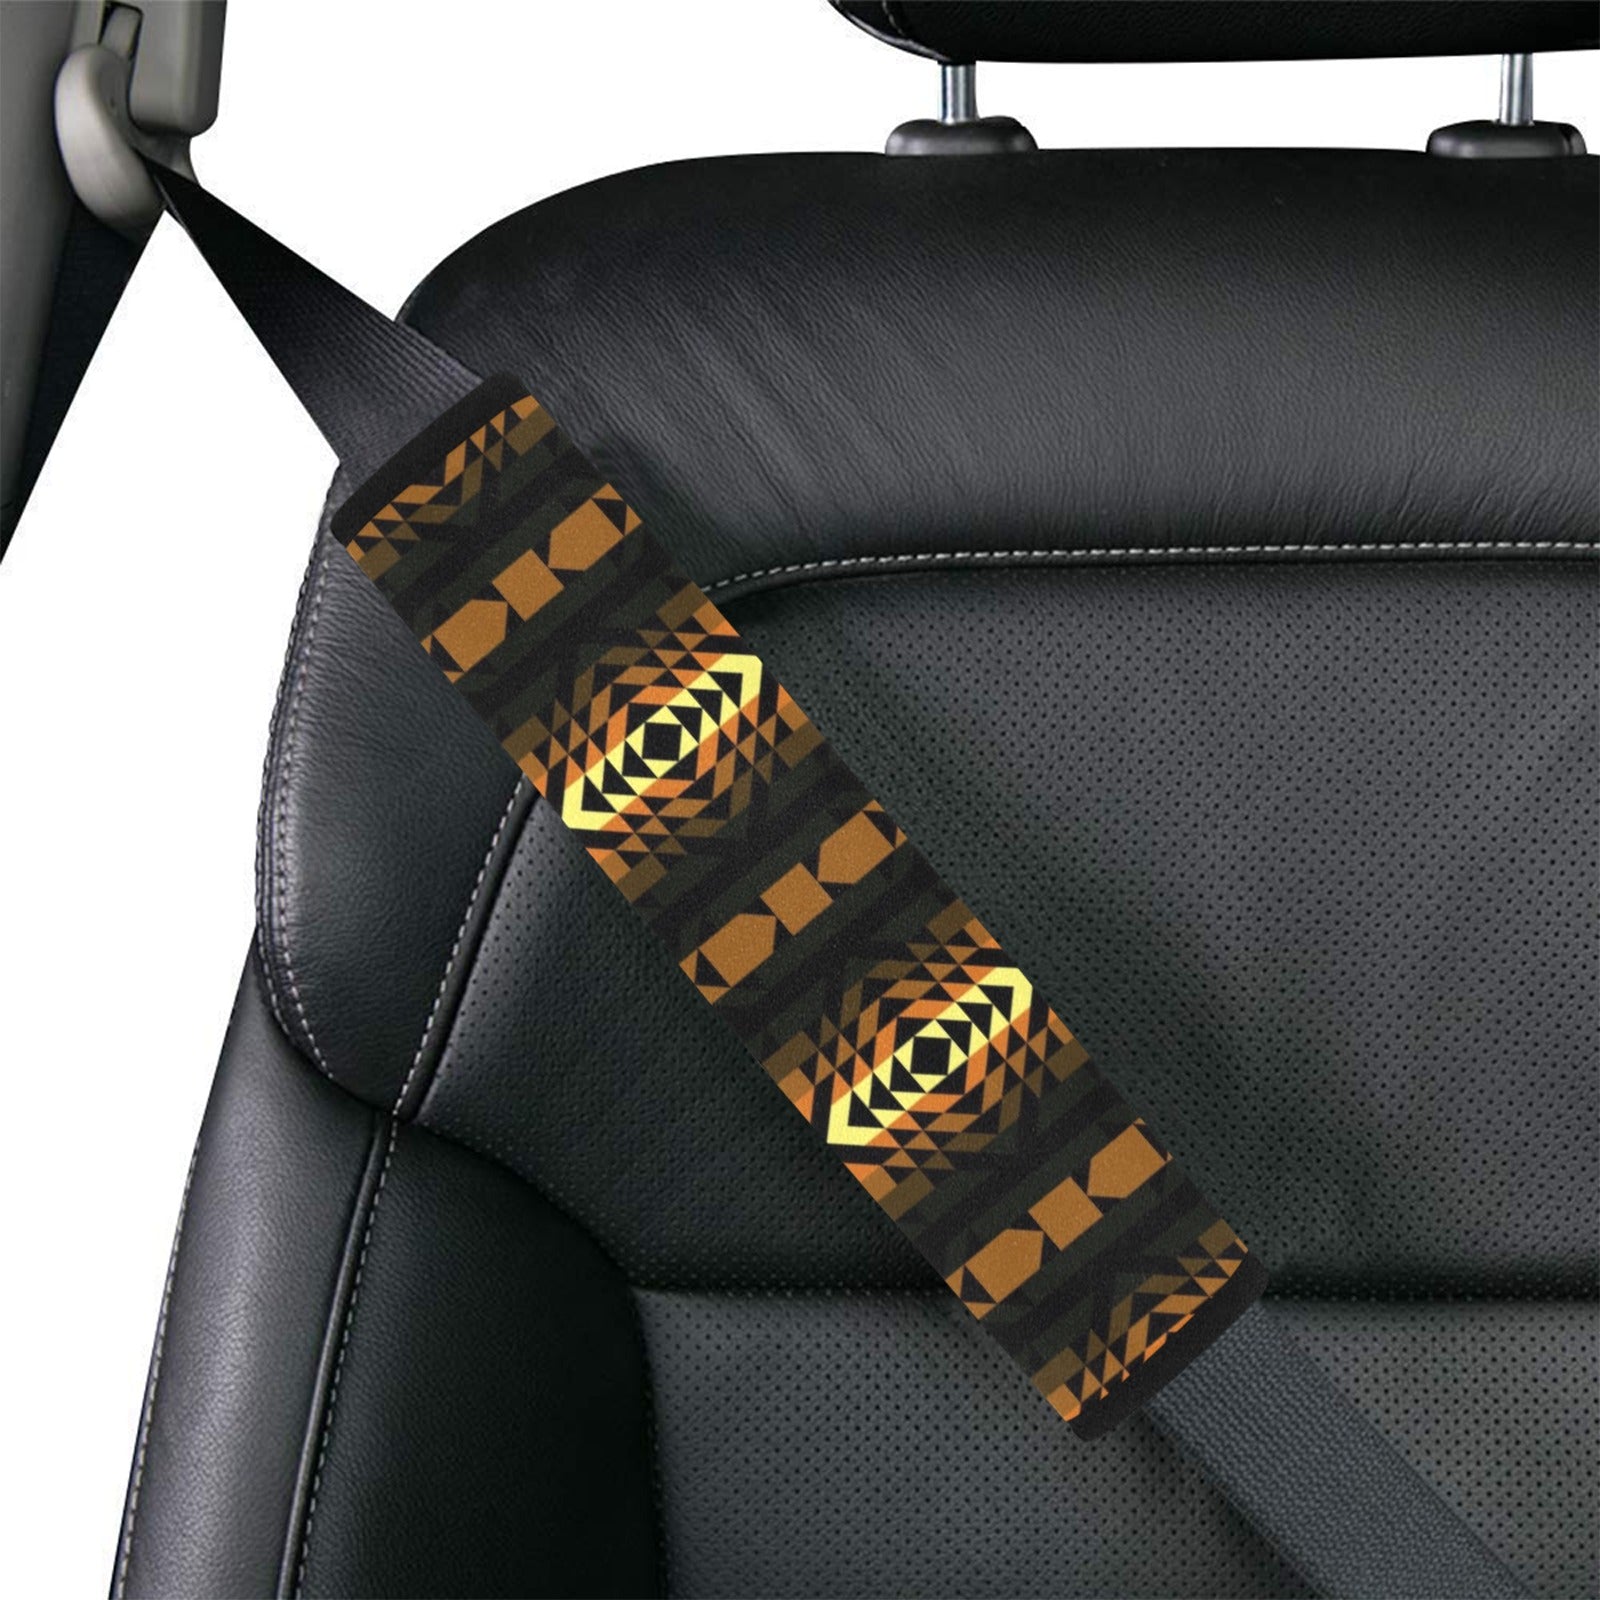 Black Rose Spring Canyon Tan Car Seat Belt Cover 7''x12.6'' (Pack of 2)